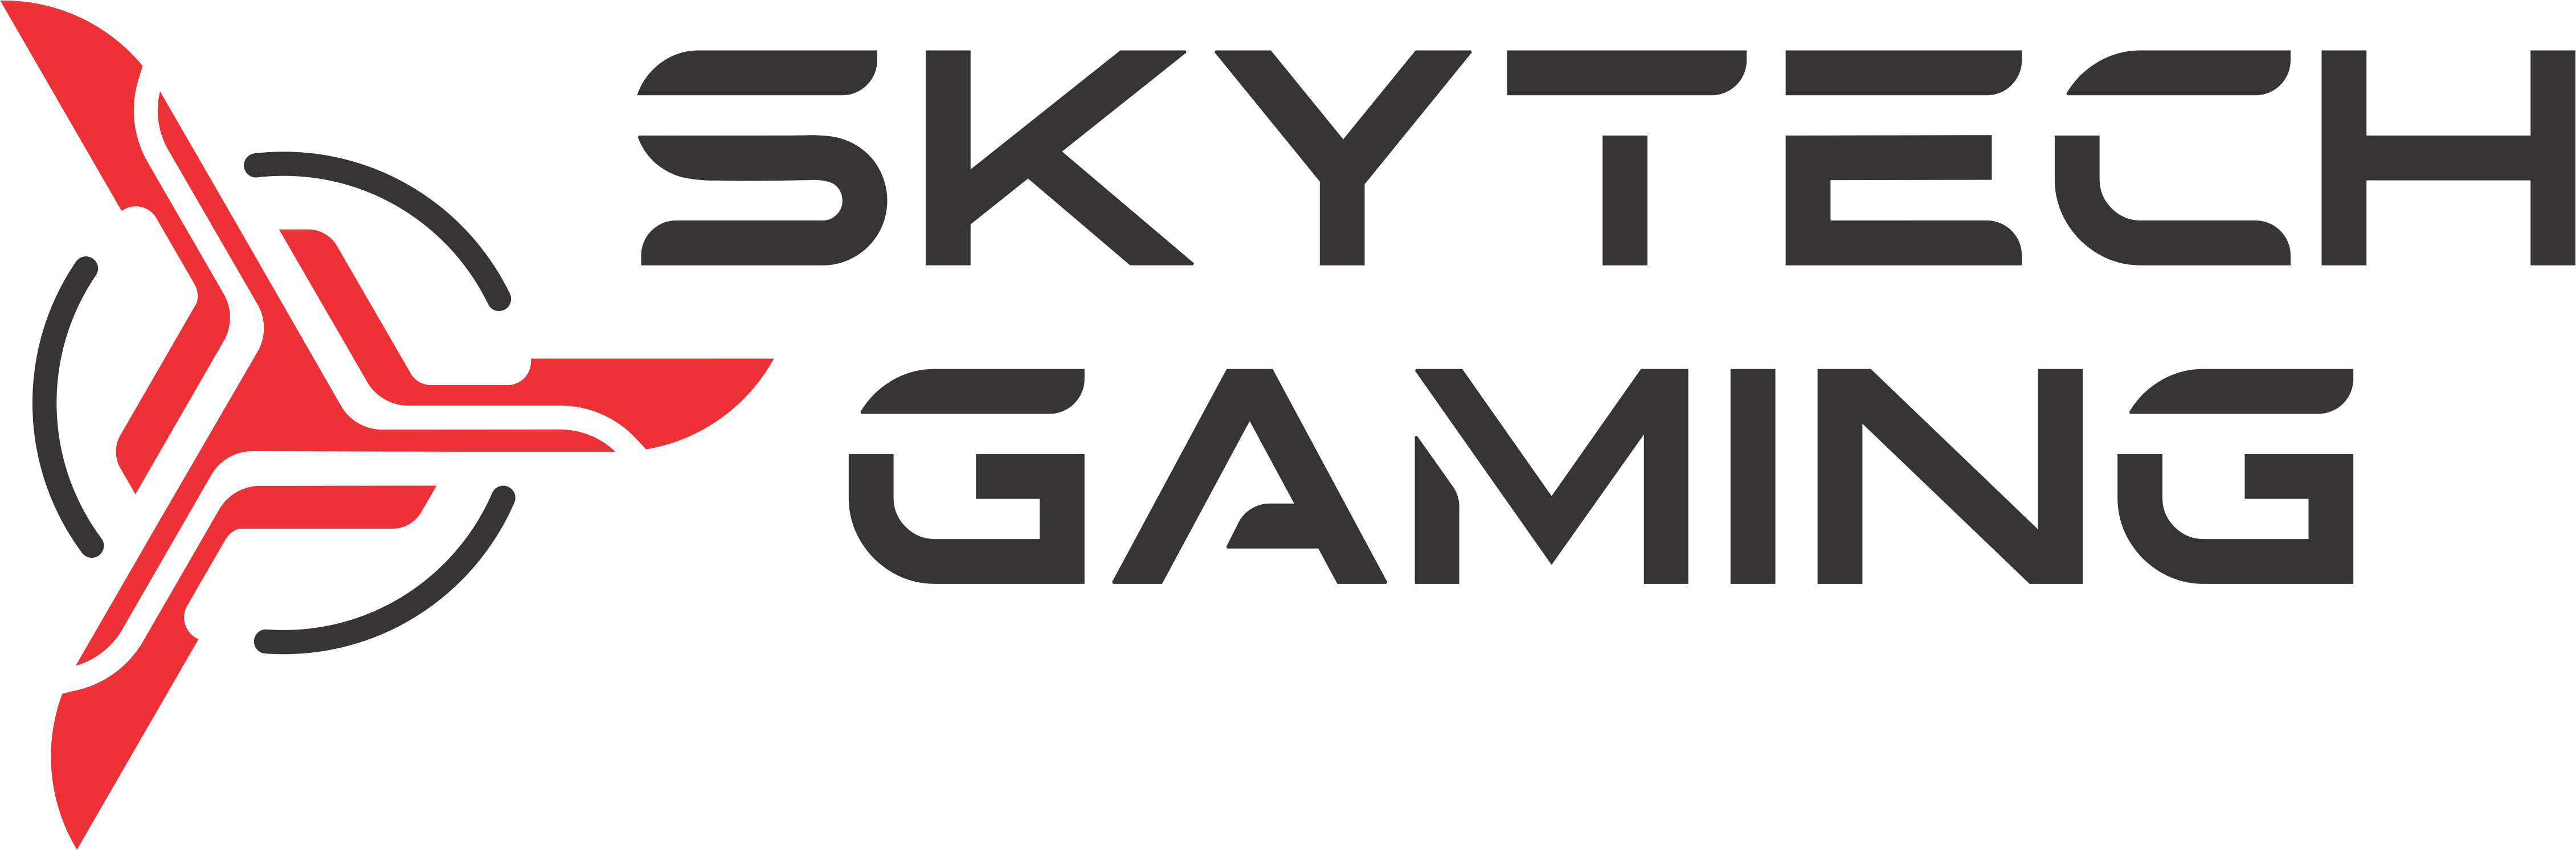  Skytech Prism II Gaming PC Desktop - AMD Ryzen 9 3900X 3.8GHz,  RTX 3090 24GB, 32GB 3600mhz RGB Memory, 1TB Gen4 SSD, 360mm AIO :  Electronics